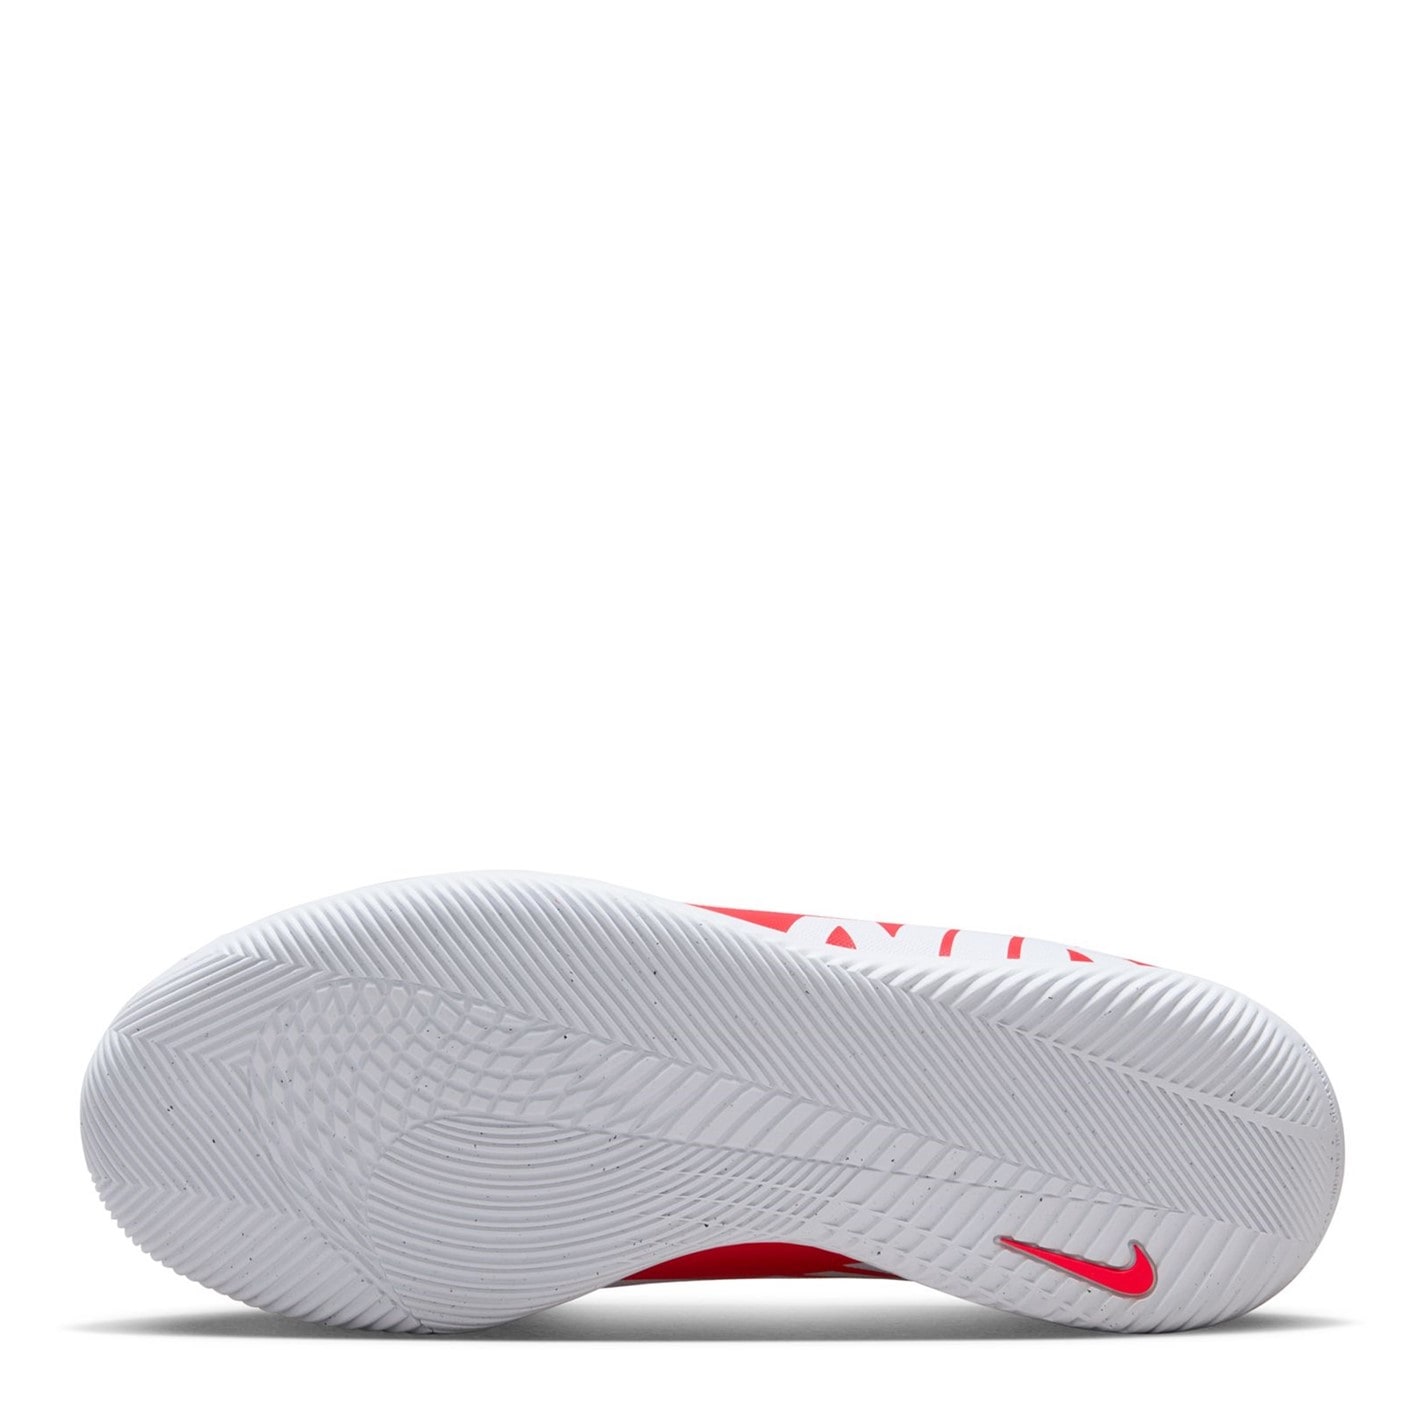 Adidasi fotbal de sala Nike Mercurial Vapor Club pentru copii rosu inchis alb